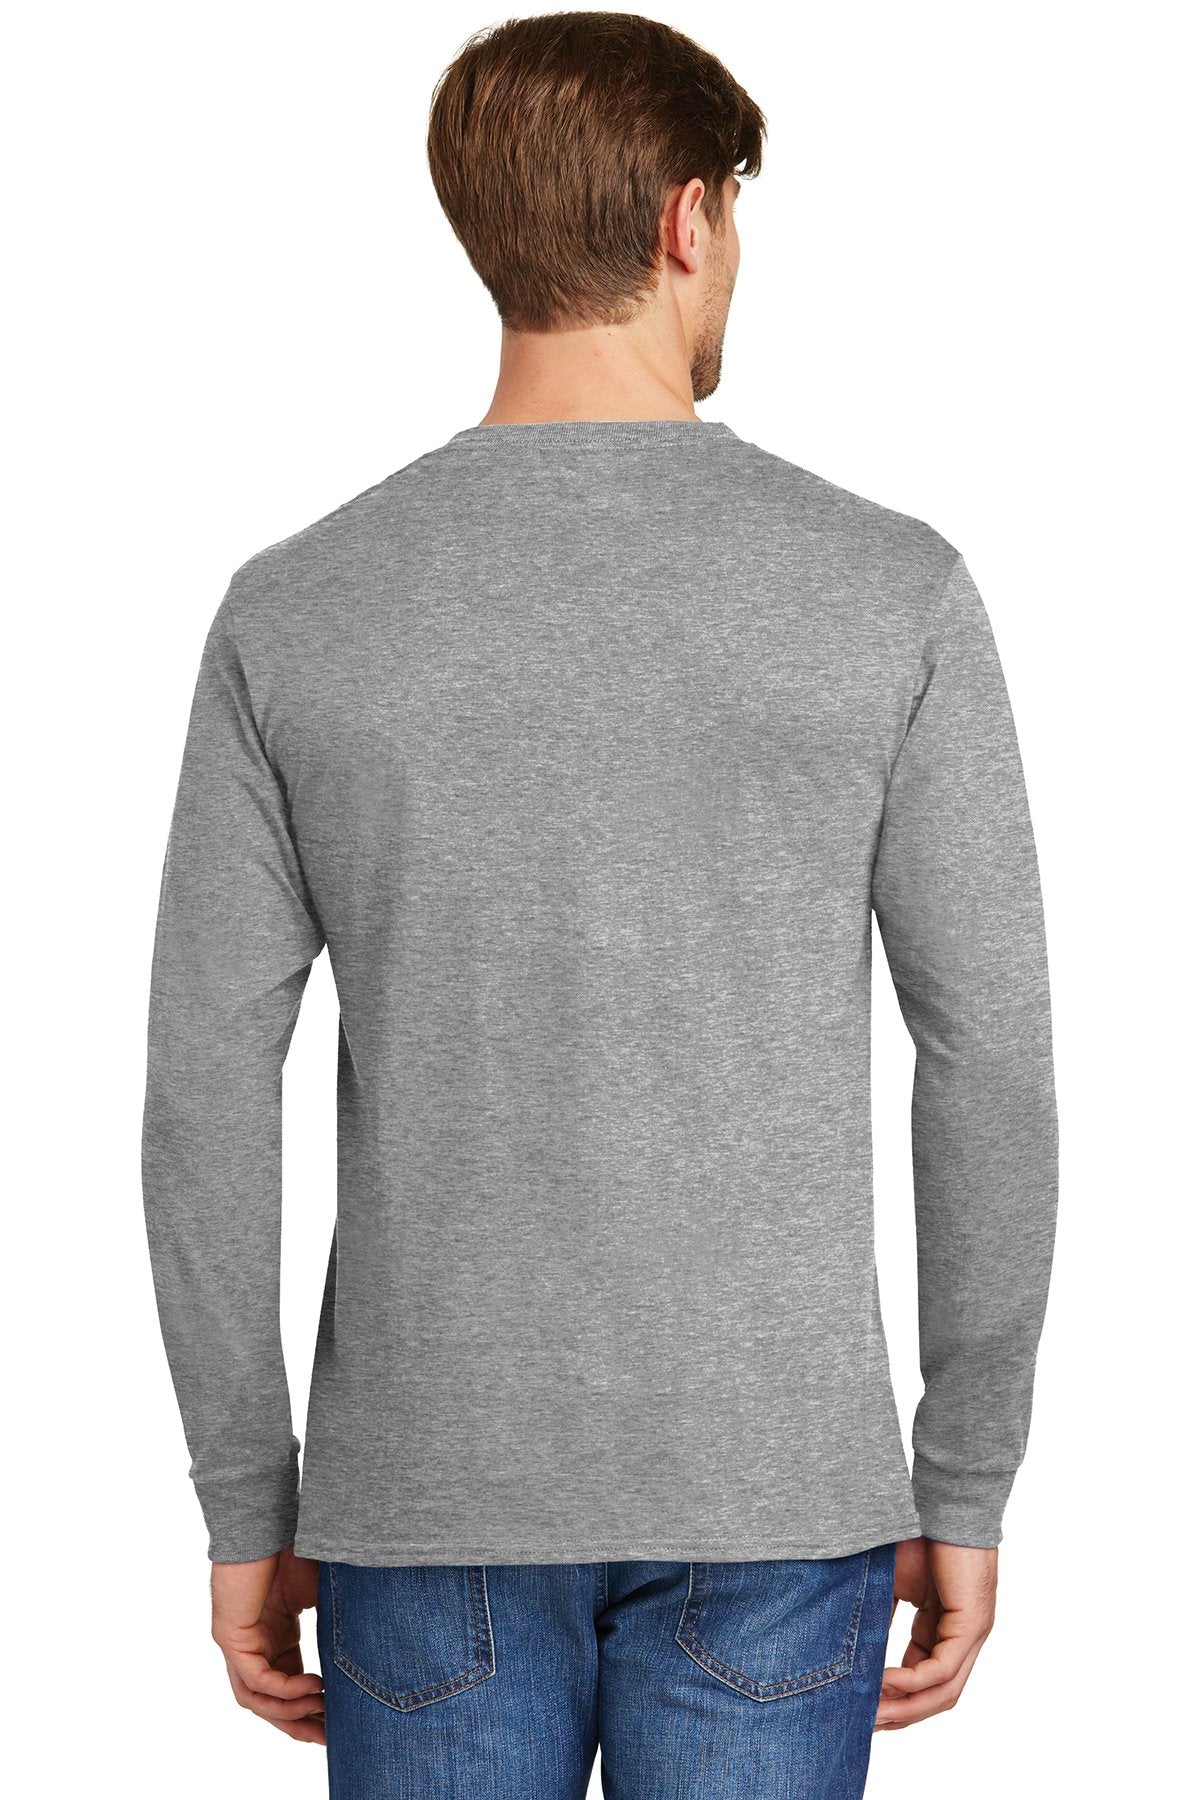 hanes tagless cotton long sleeve t shirt 5586 light steel